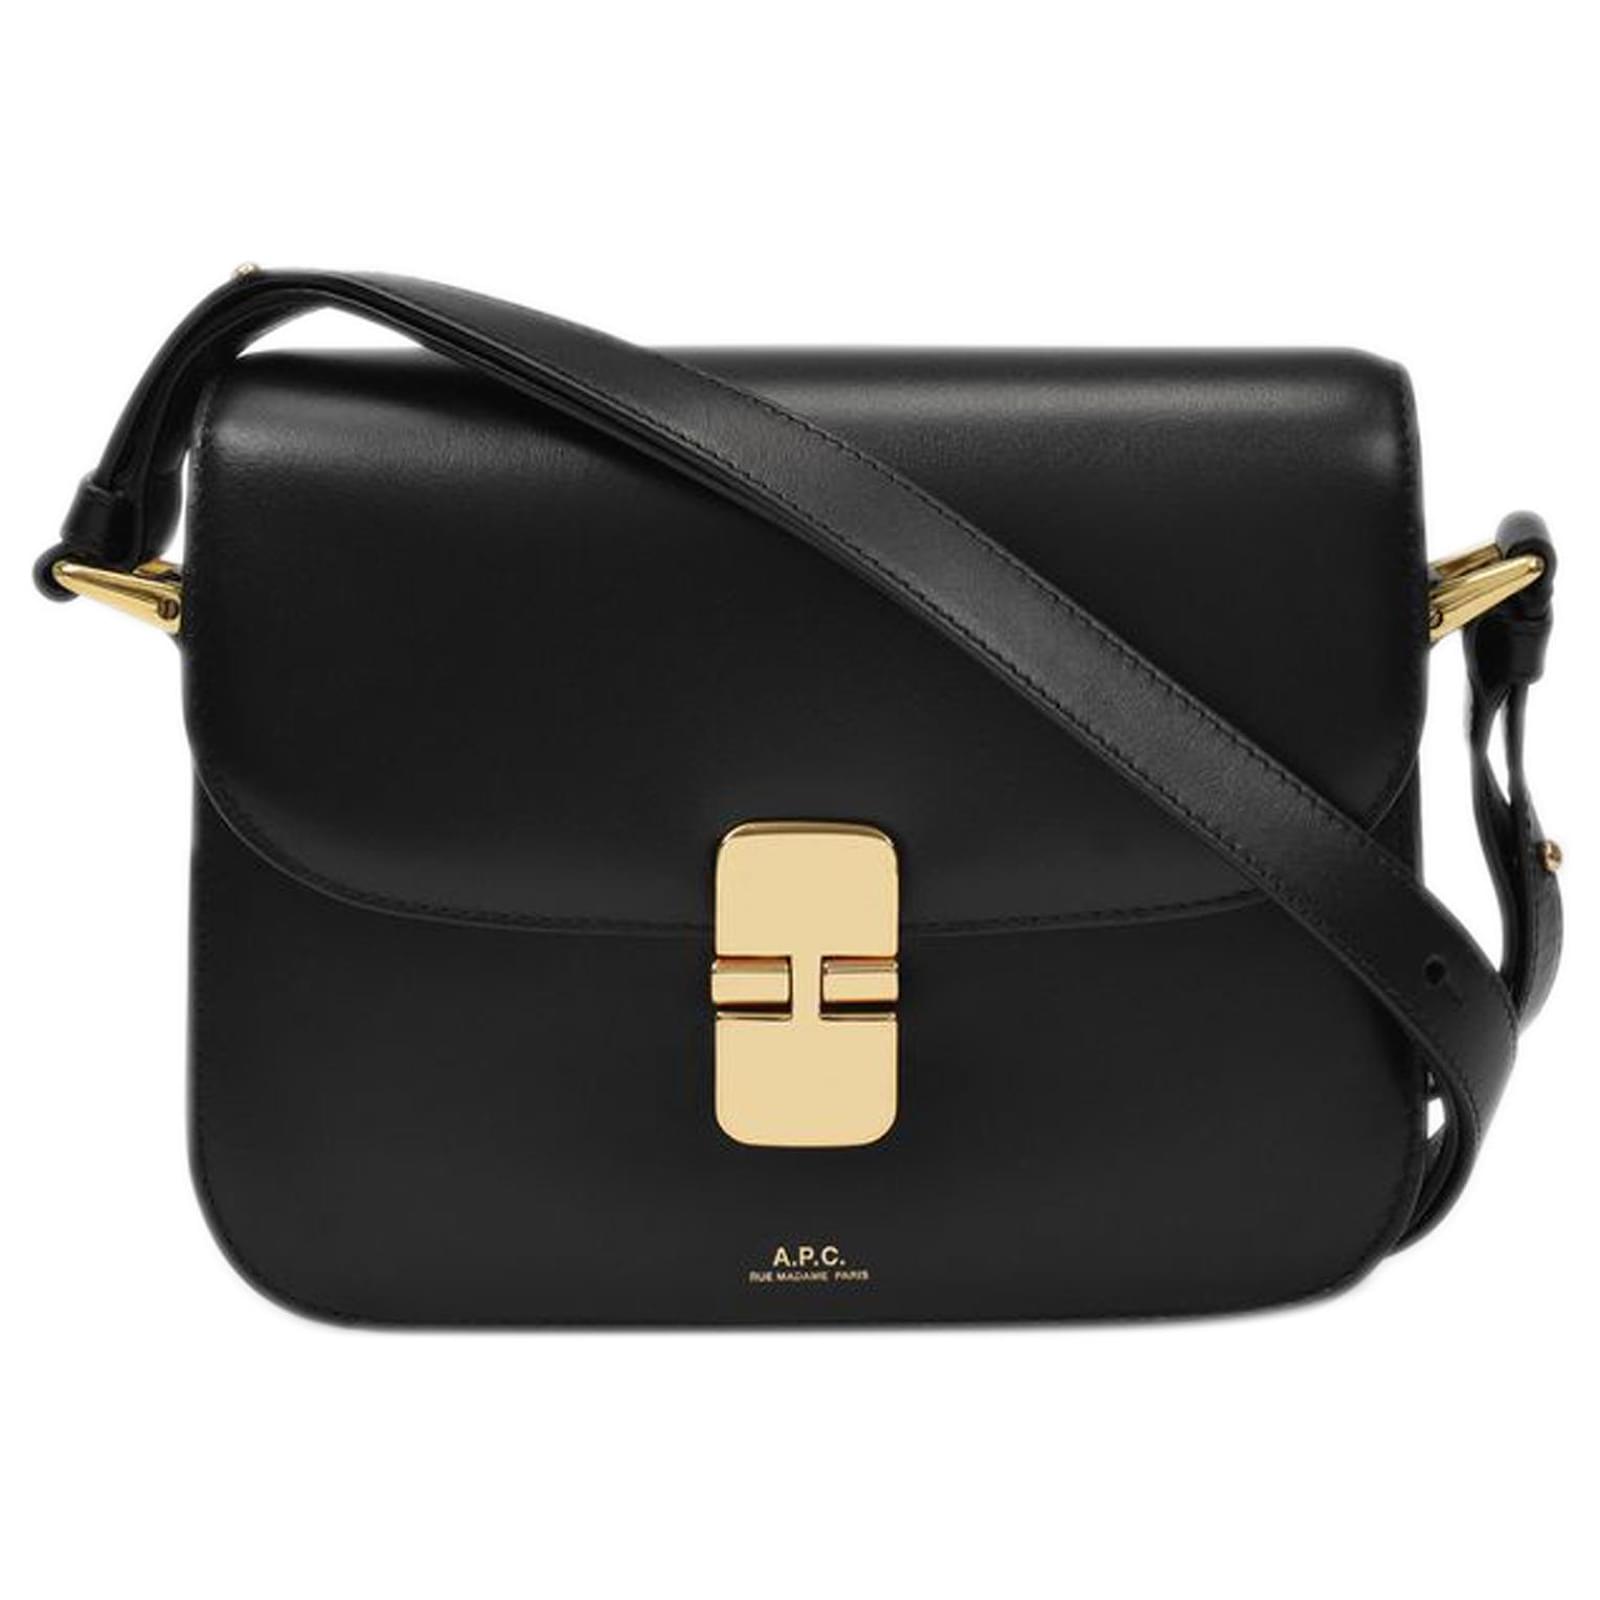 Grace Mini Leather Shoulder Bag in Black - A P C